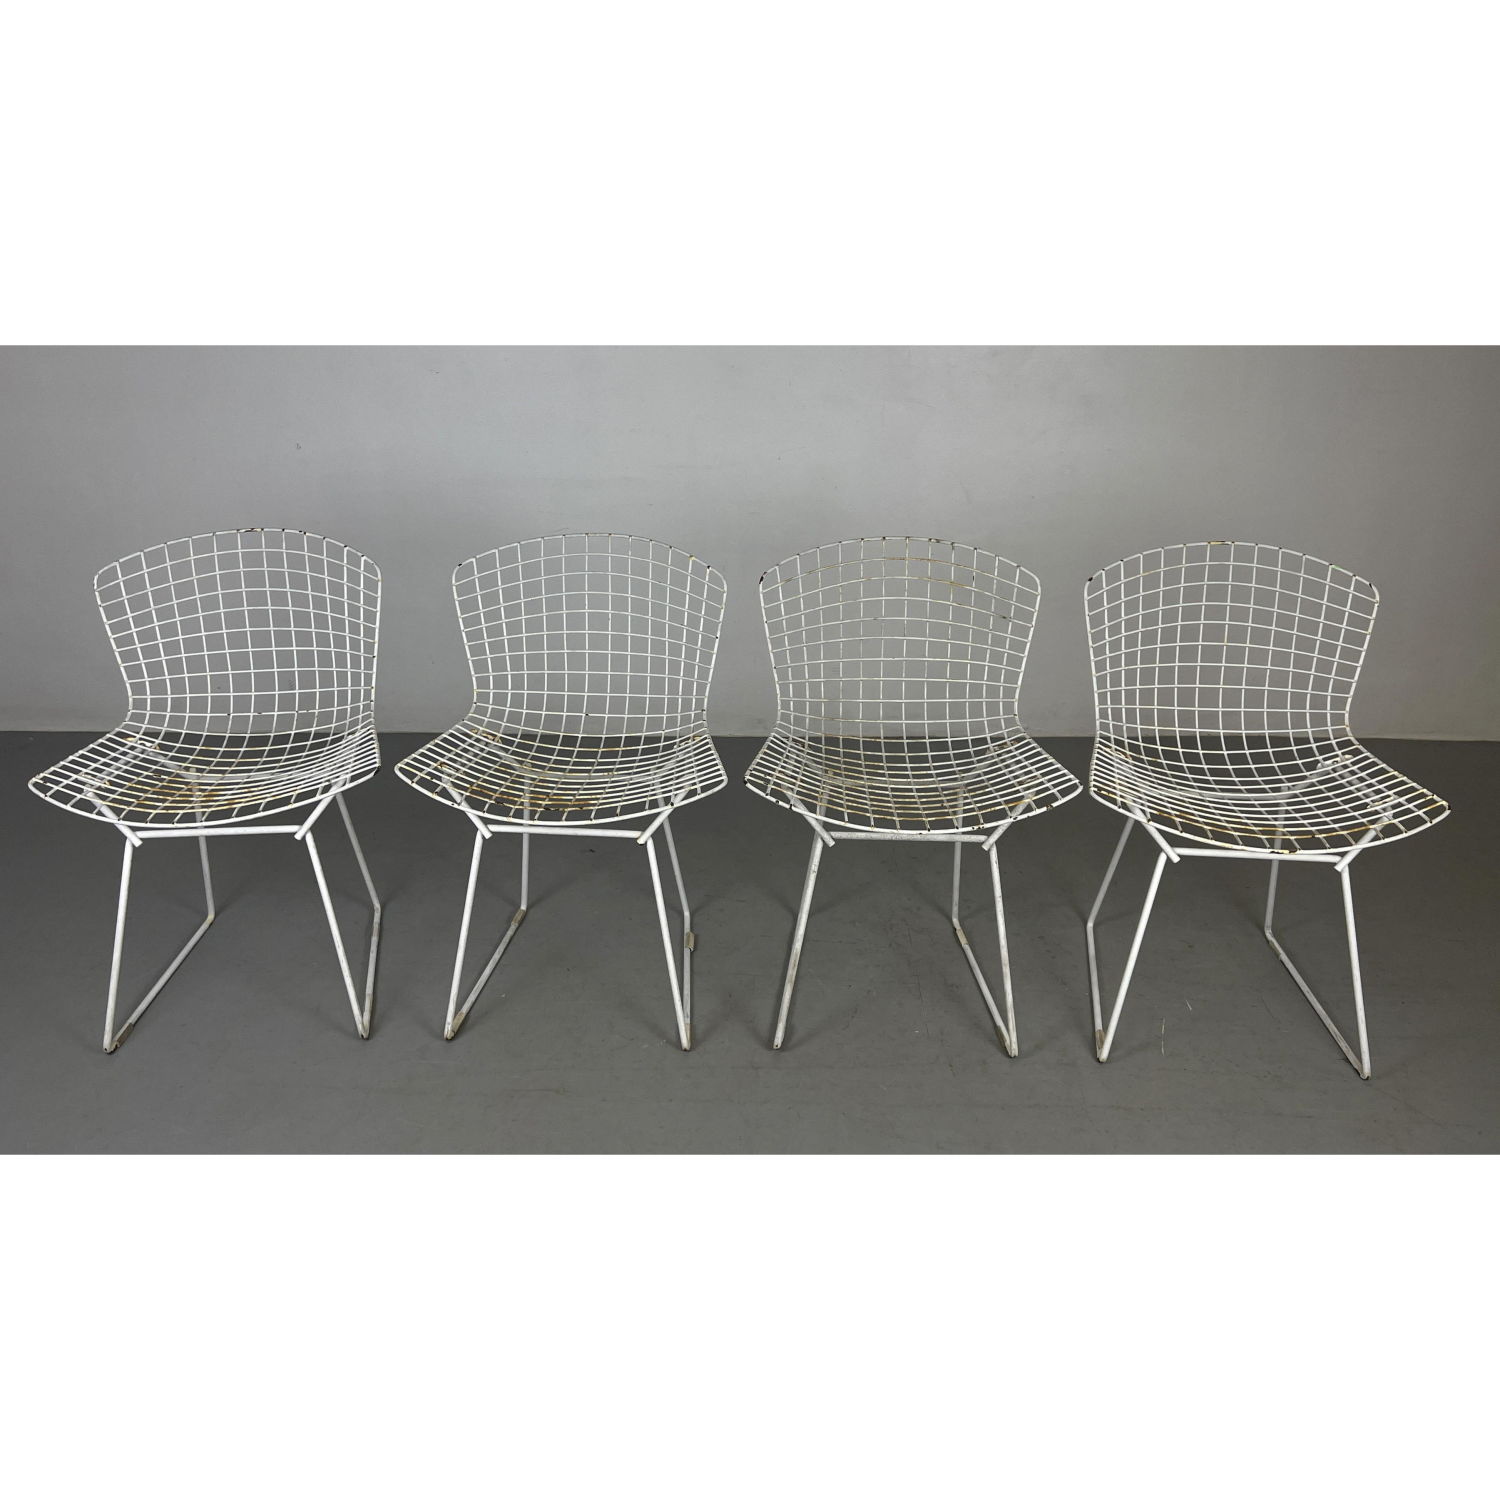 Set 4 Harry Bertoia Wire Side Chairs  2ff35f